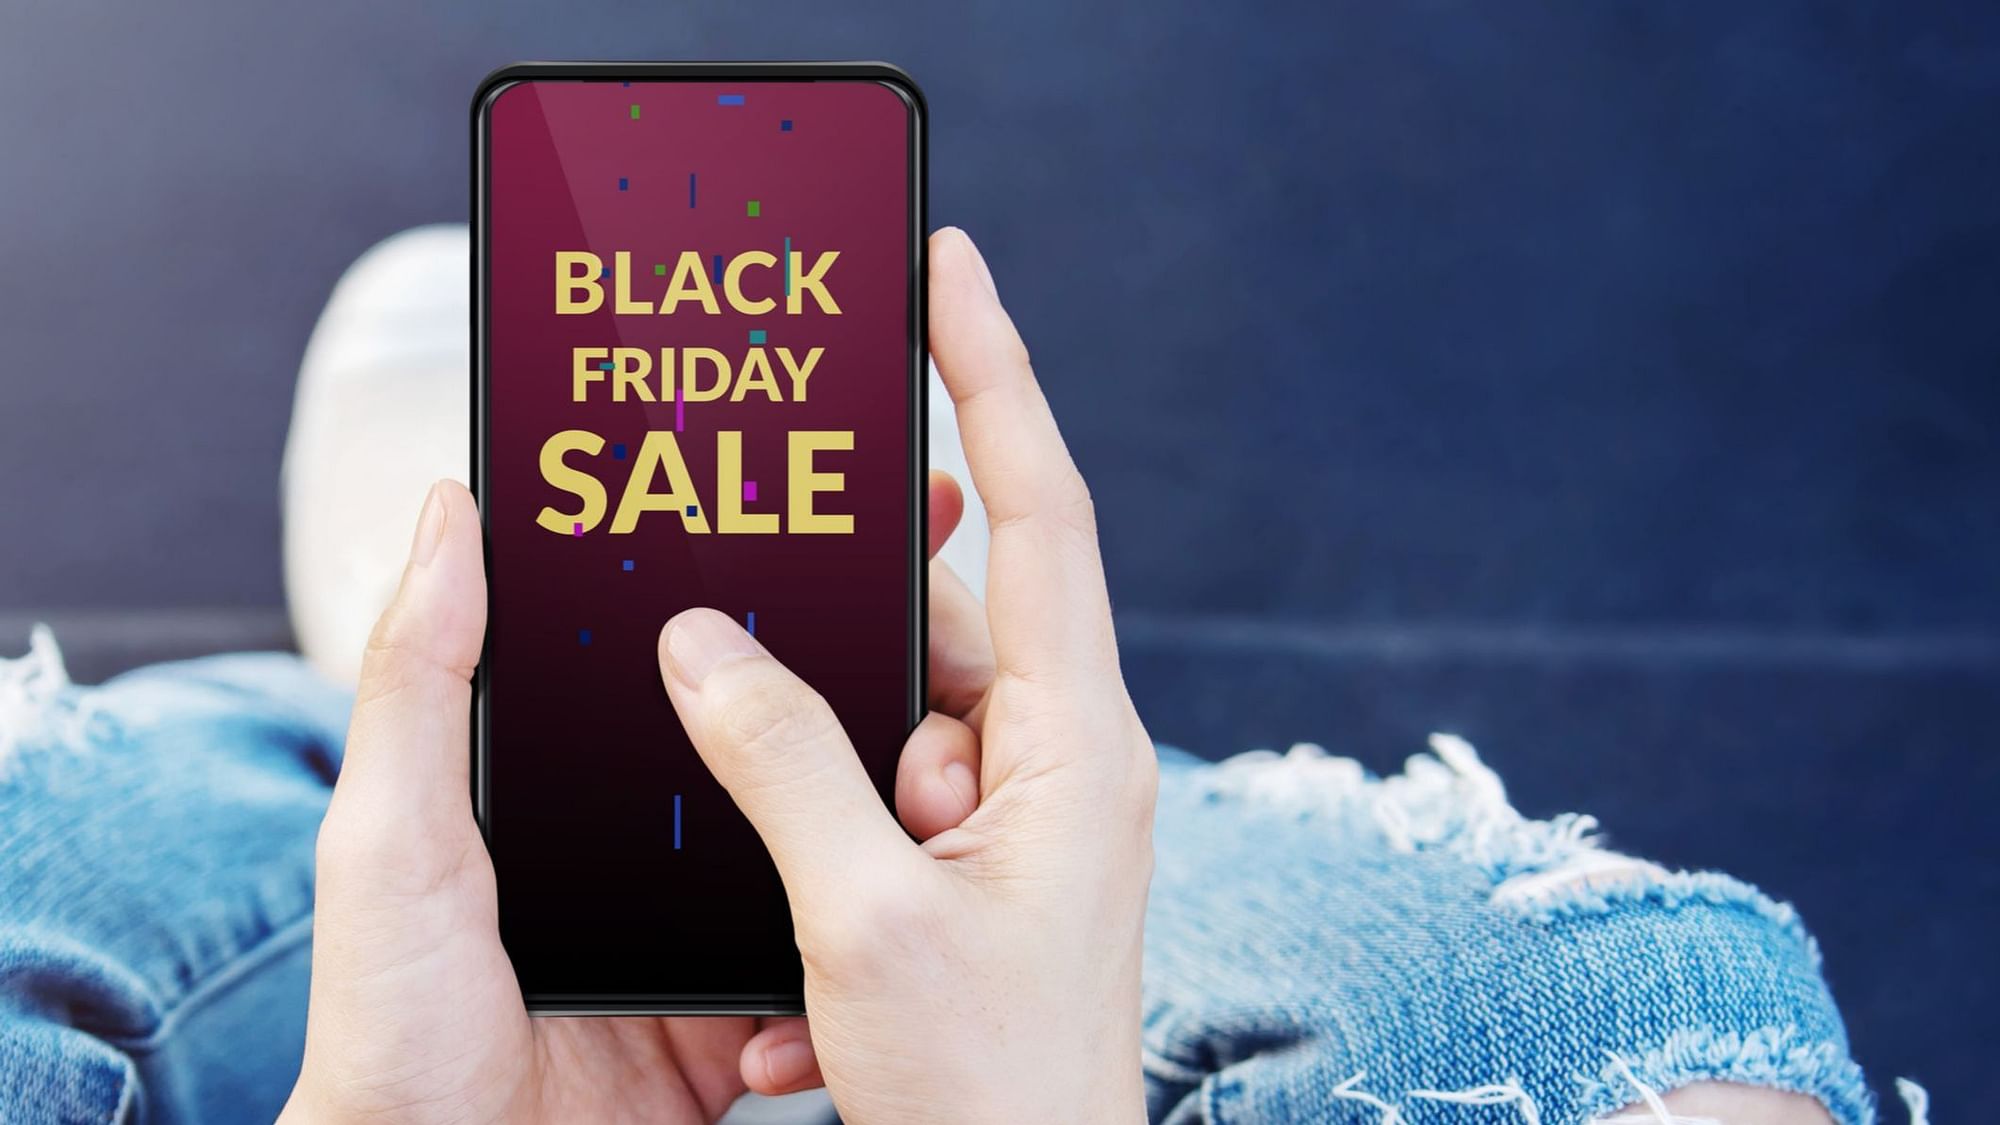 Black Friday Sale kicks off on 23 November.